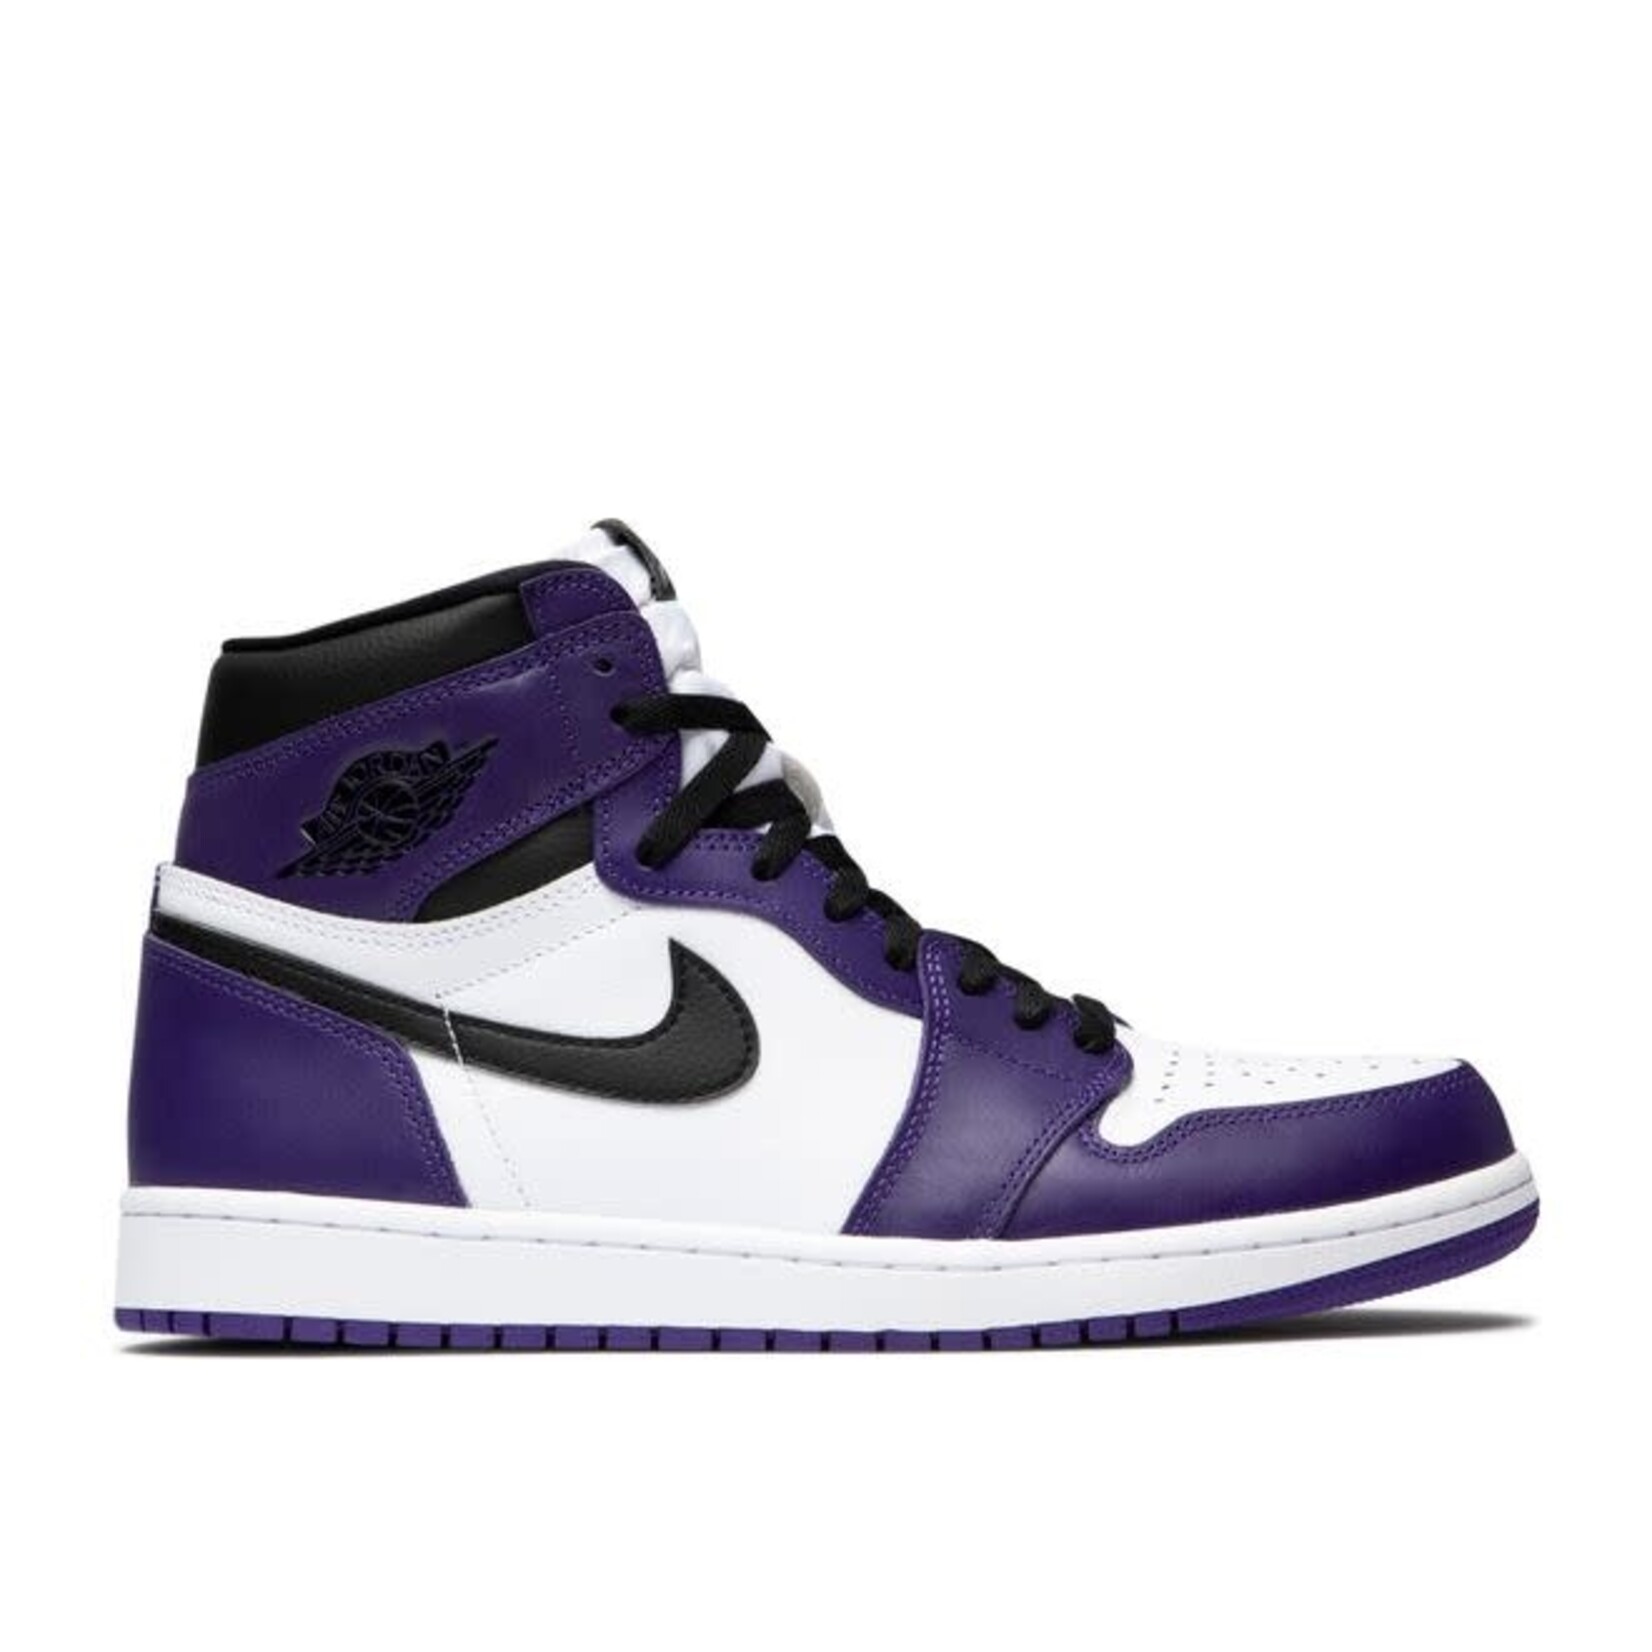 Jordan Jordan 1 Retro High Court Purple White Size 9.5, DS BRAND NEW